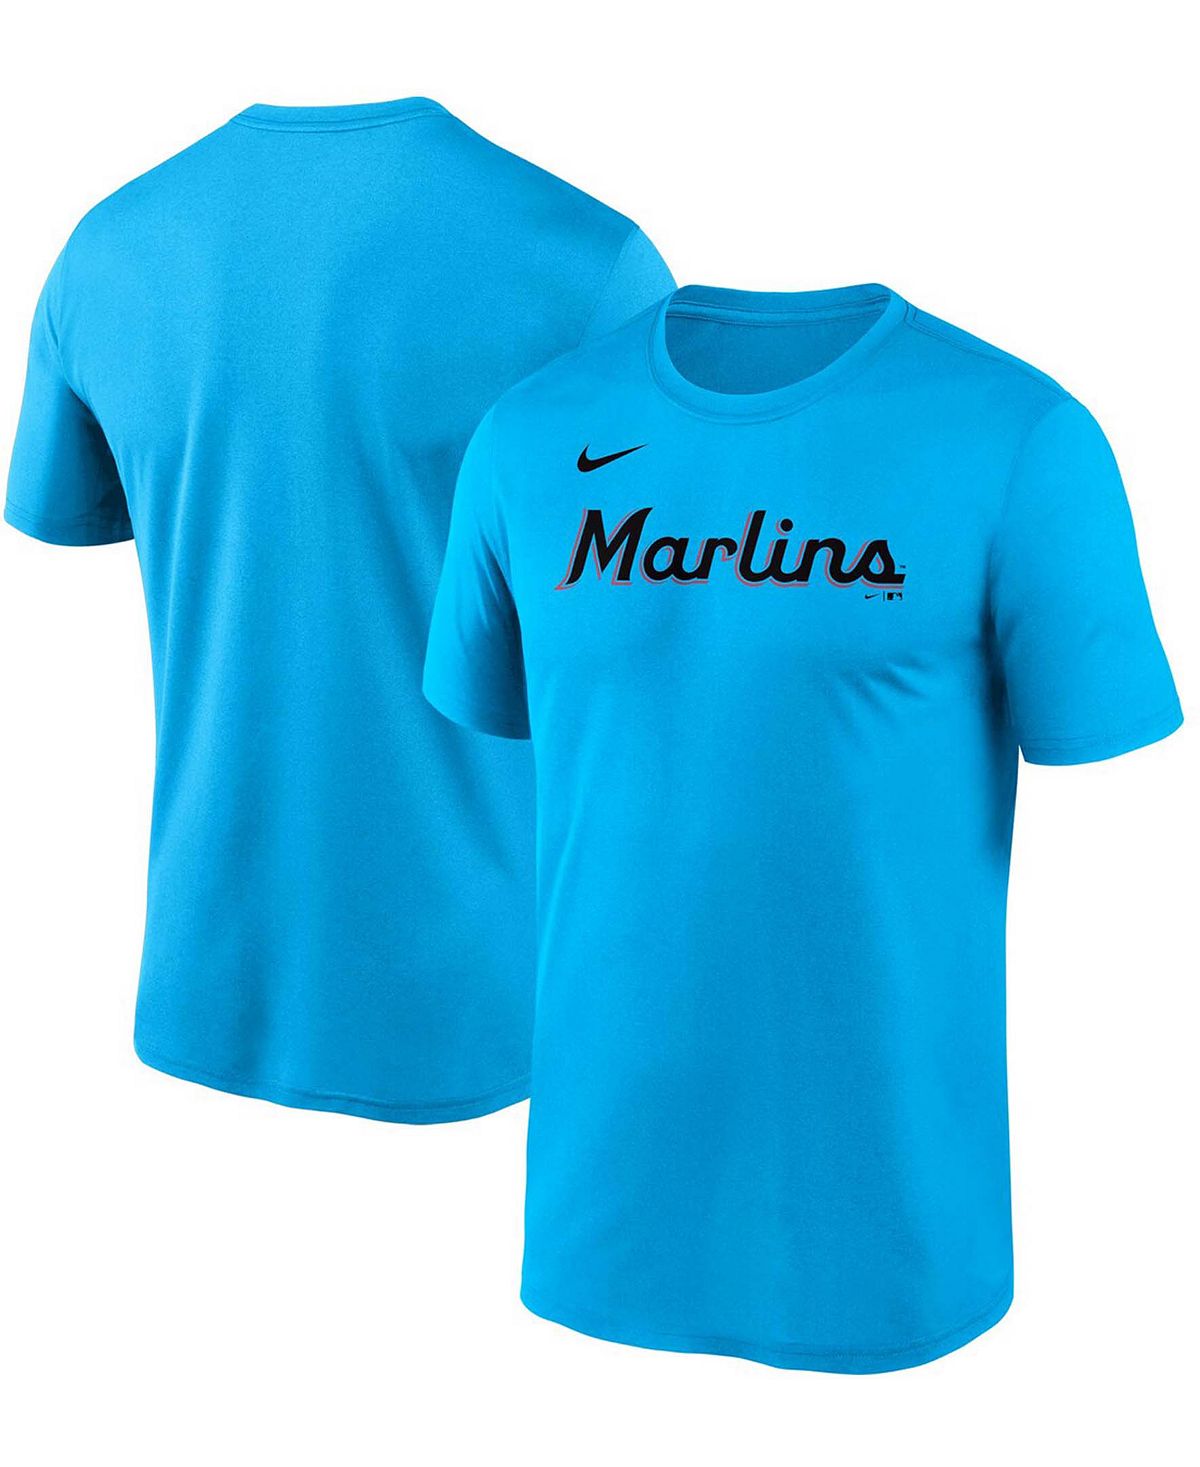 Мужская синяя футболка miami marlins wordmark legend Nike, синий рюкзак для ноутбука премиум класса miami marlins